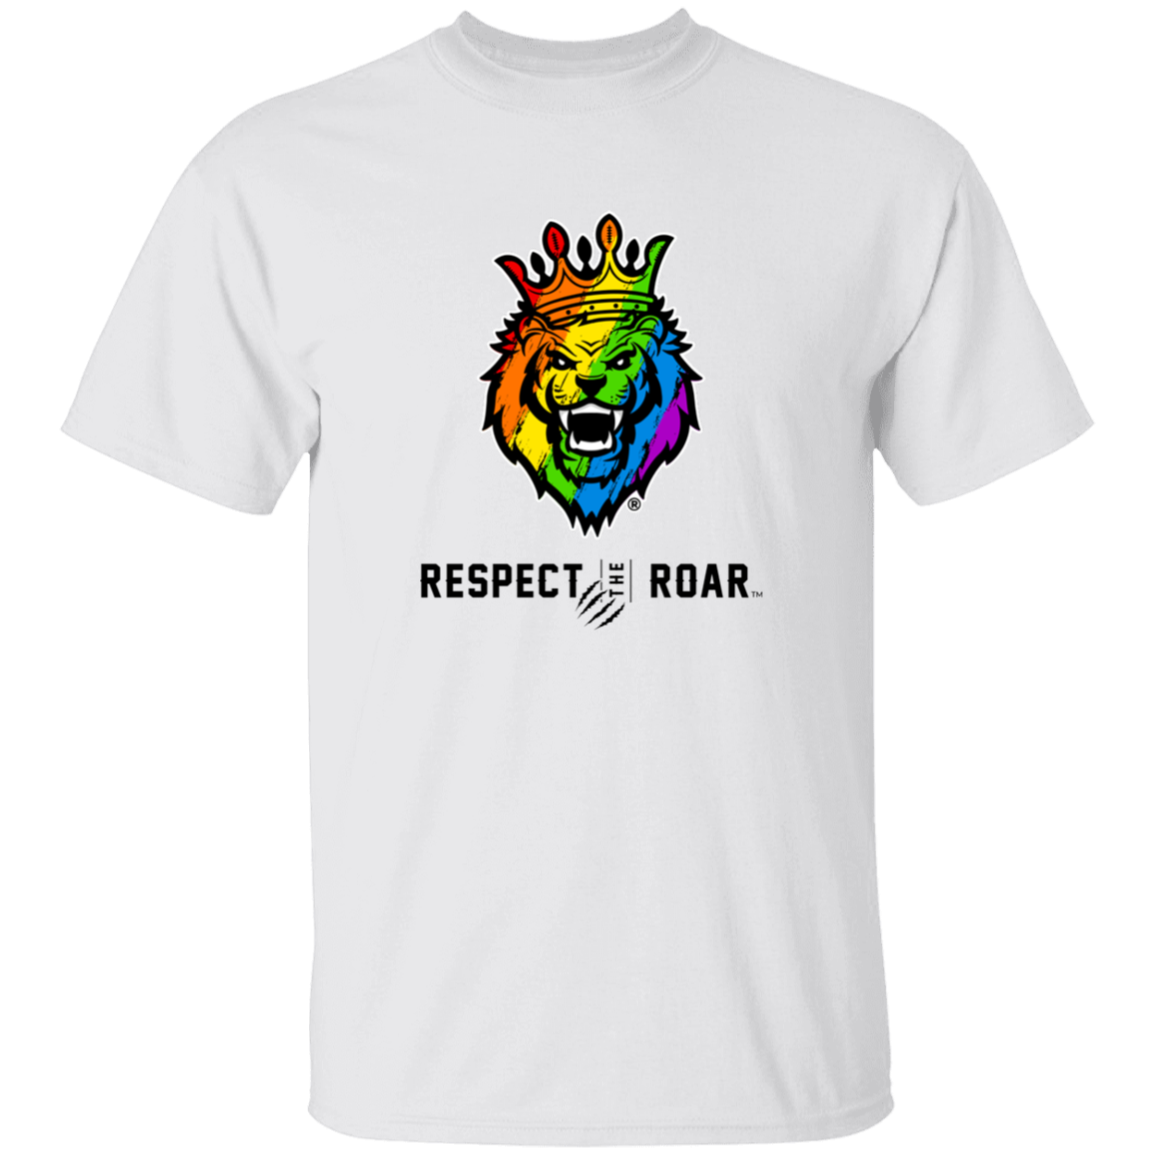 Respect The Roar (Pride) - G500 5.3 oz. T-Shirt